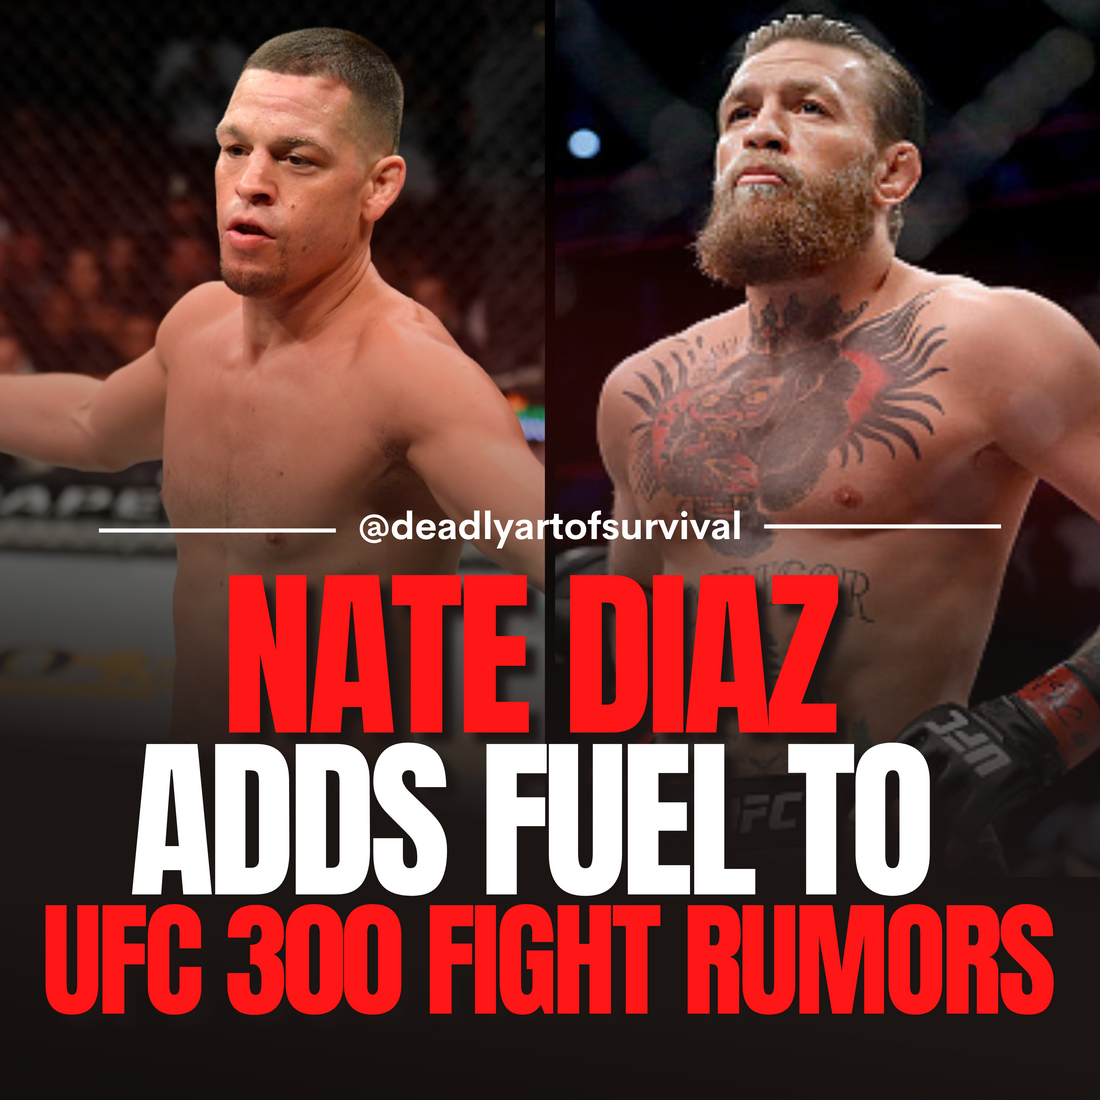 Nate-Diaz-Sparks-UFC-300-Buzz-Former-Title-Challenger-Joins-Fight-Rumors deadlyartofsurvival.com